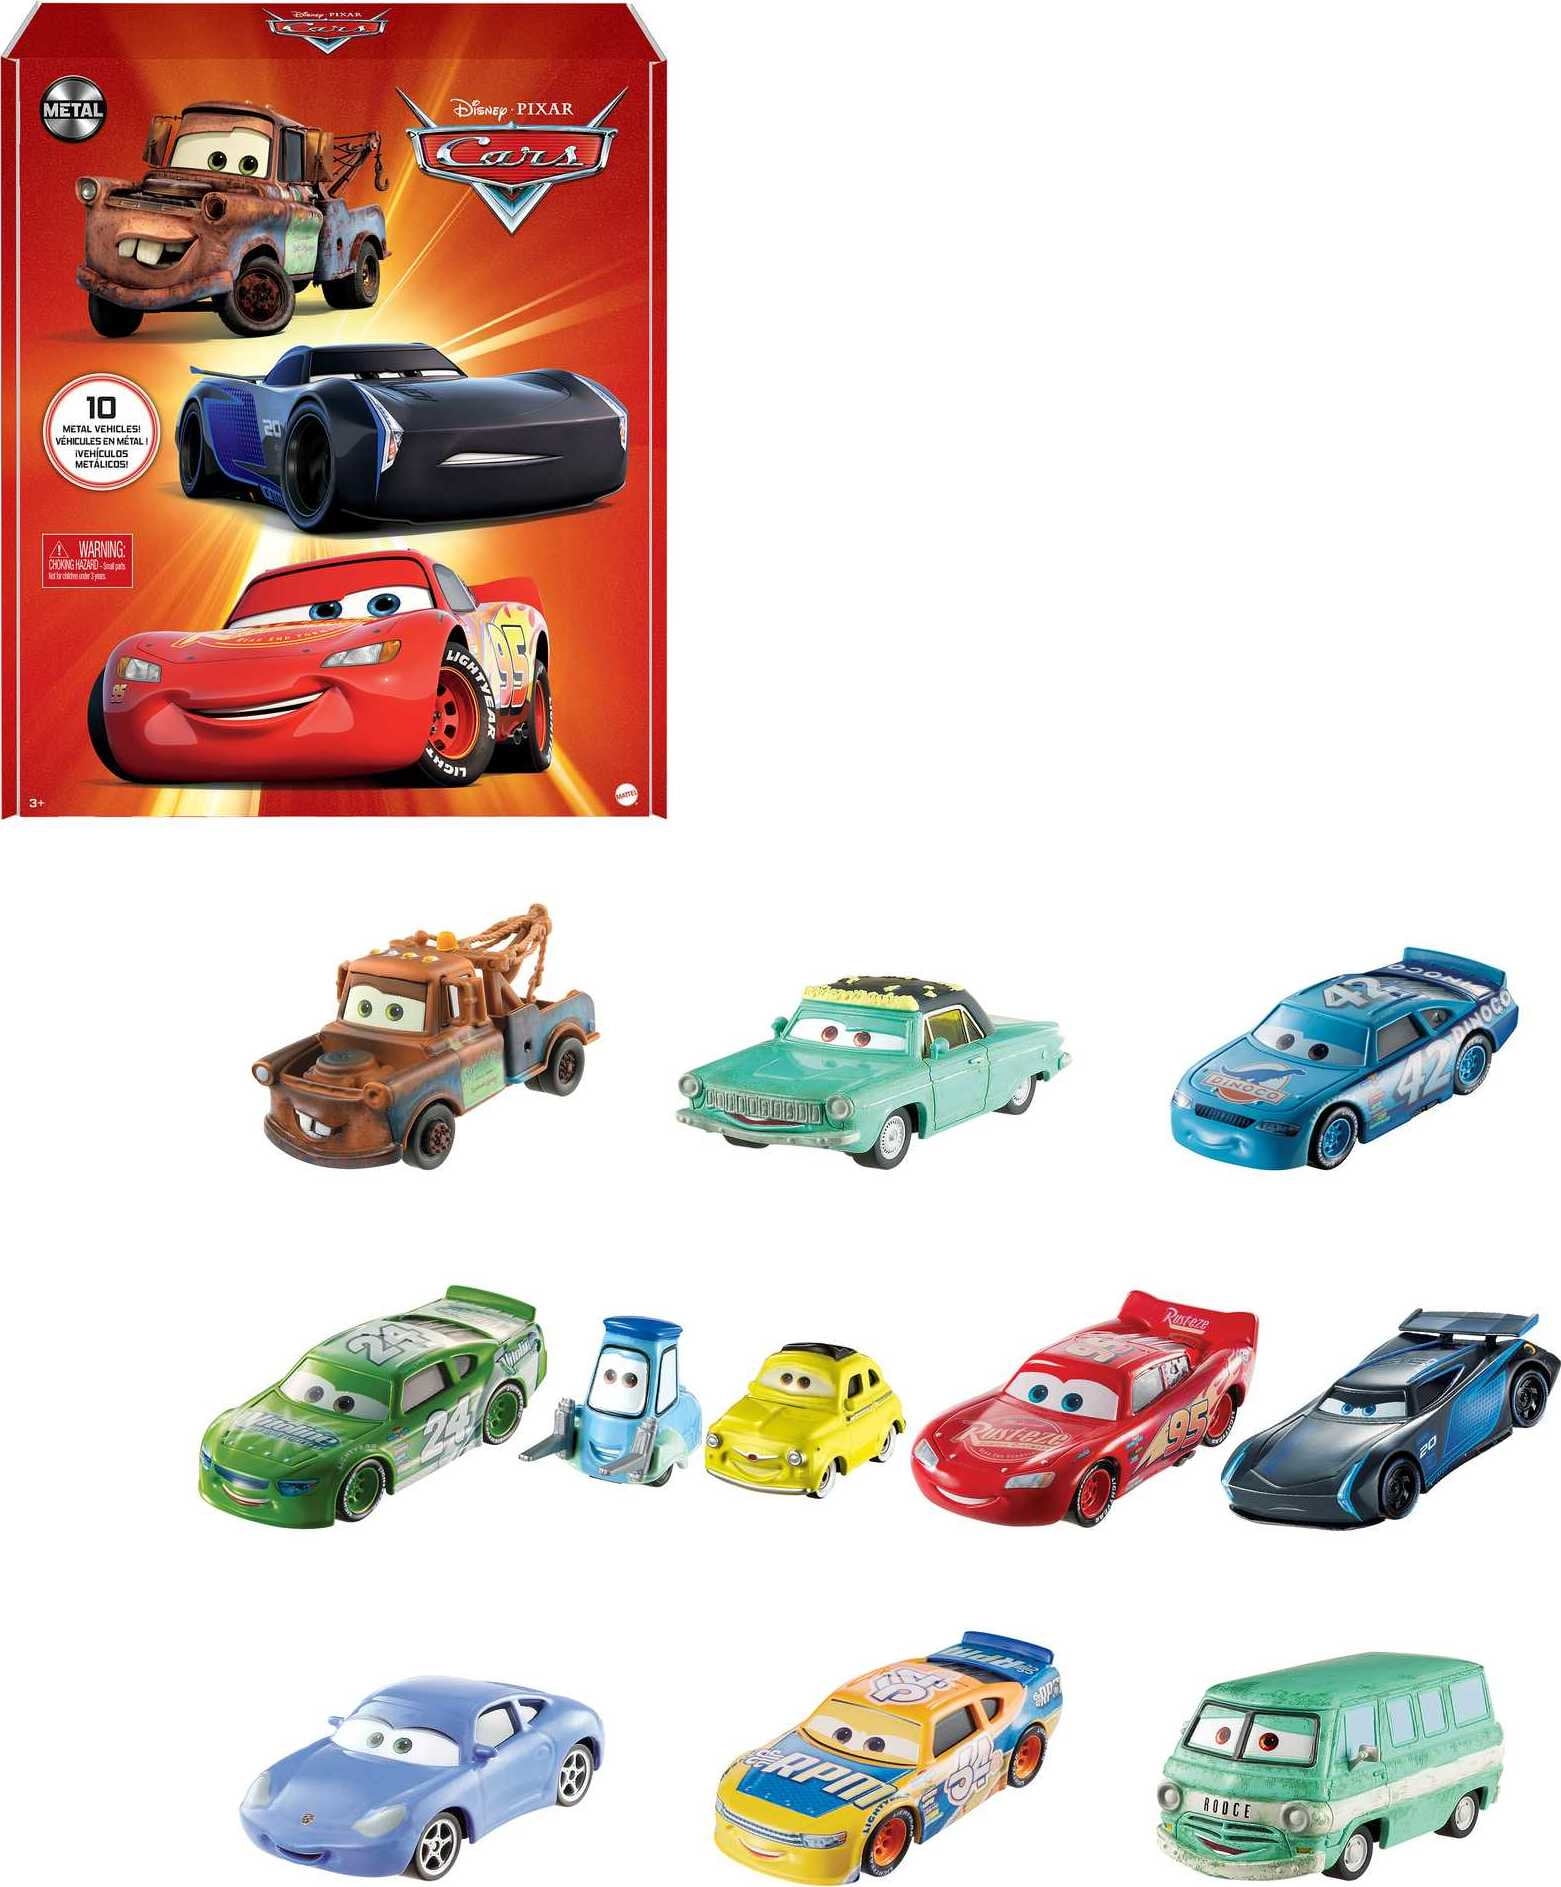 U.S.A Toy Car Model 1:55 Diecast Boy Kids Gift Disney Pixar Cars 2 Racers U.K 